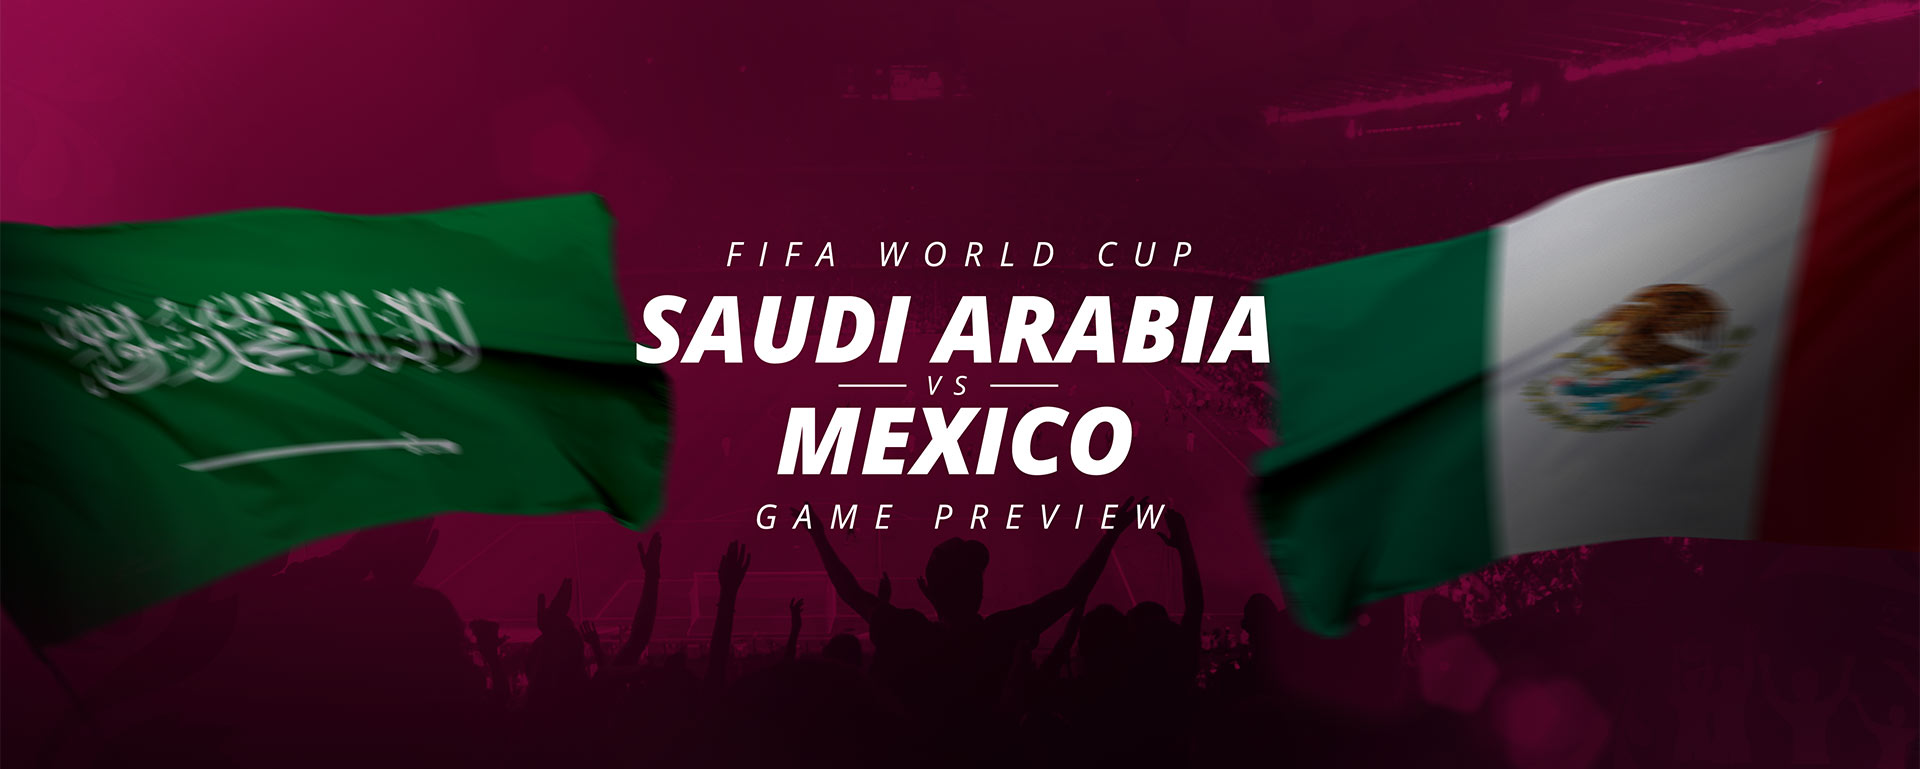 FIFA WORLD CUP: SAUDI ARABIA V MEXICO – GAME PREVIEW